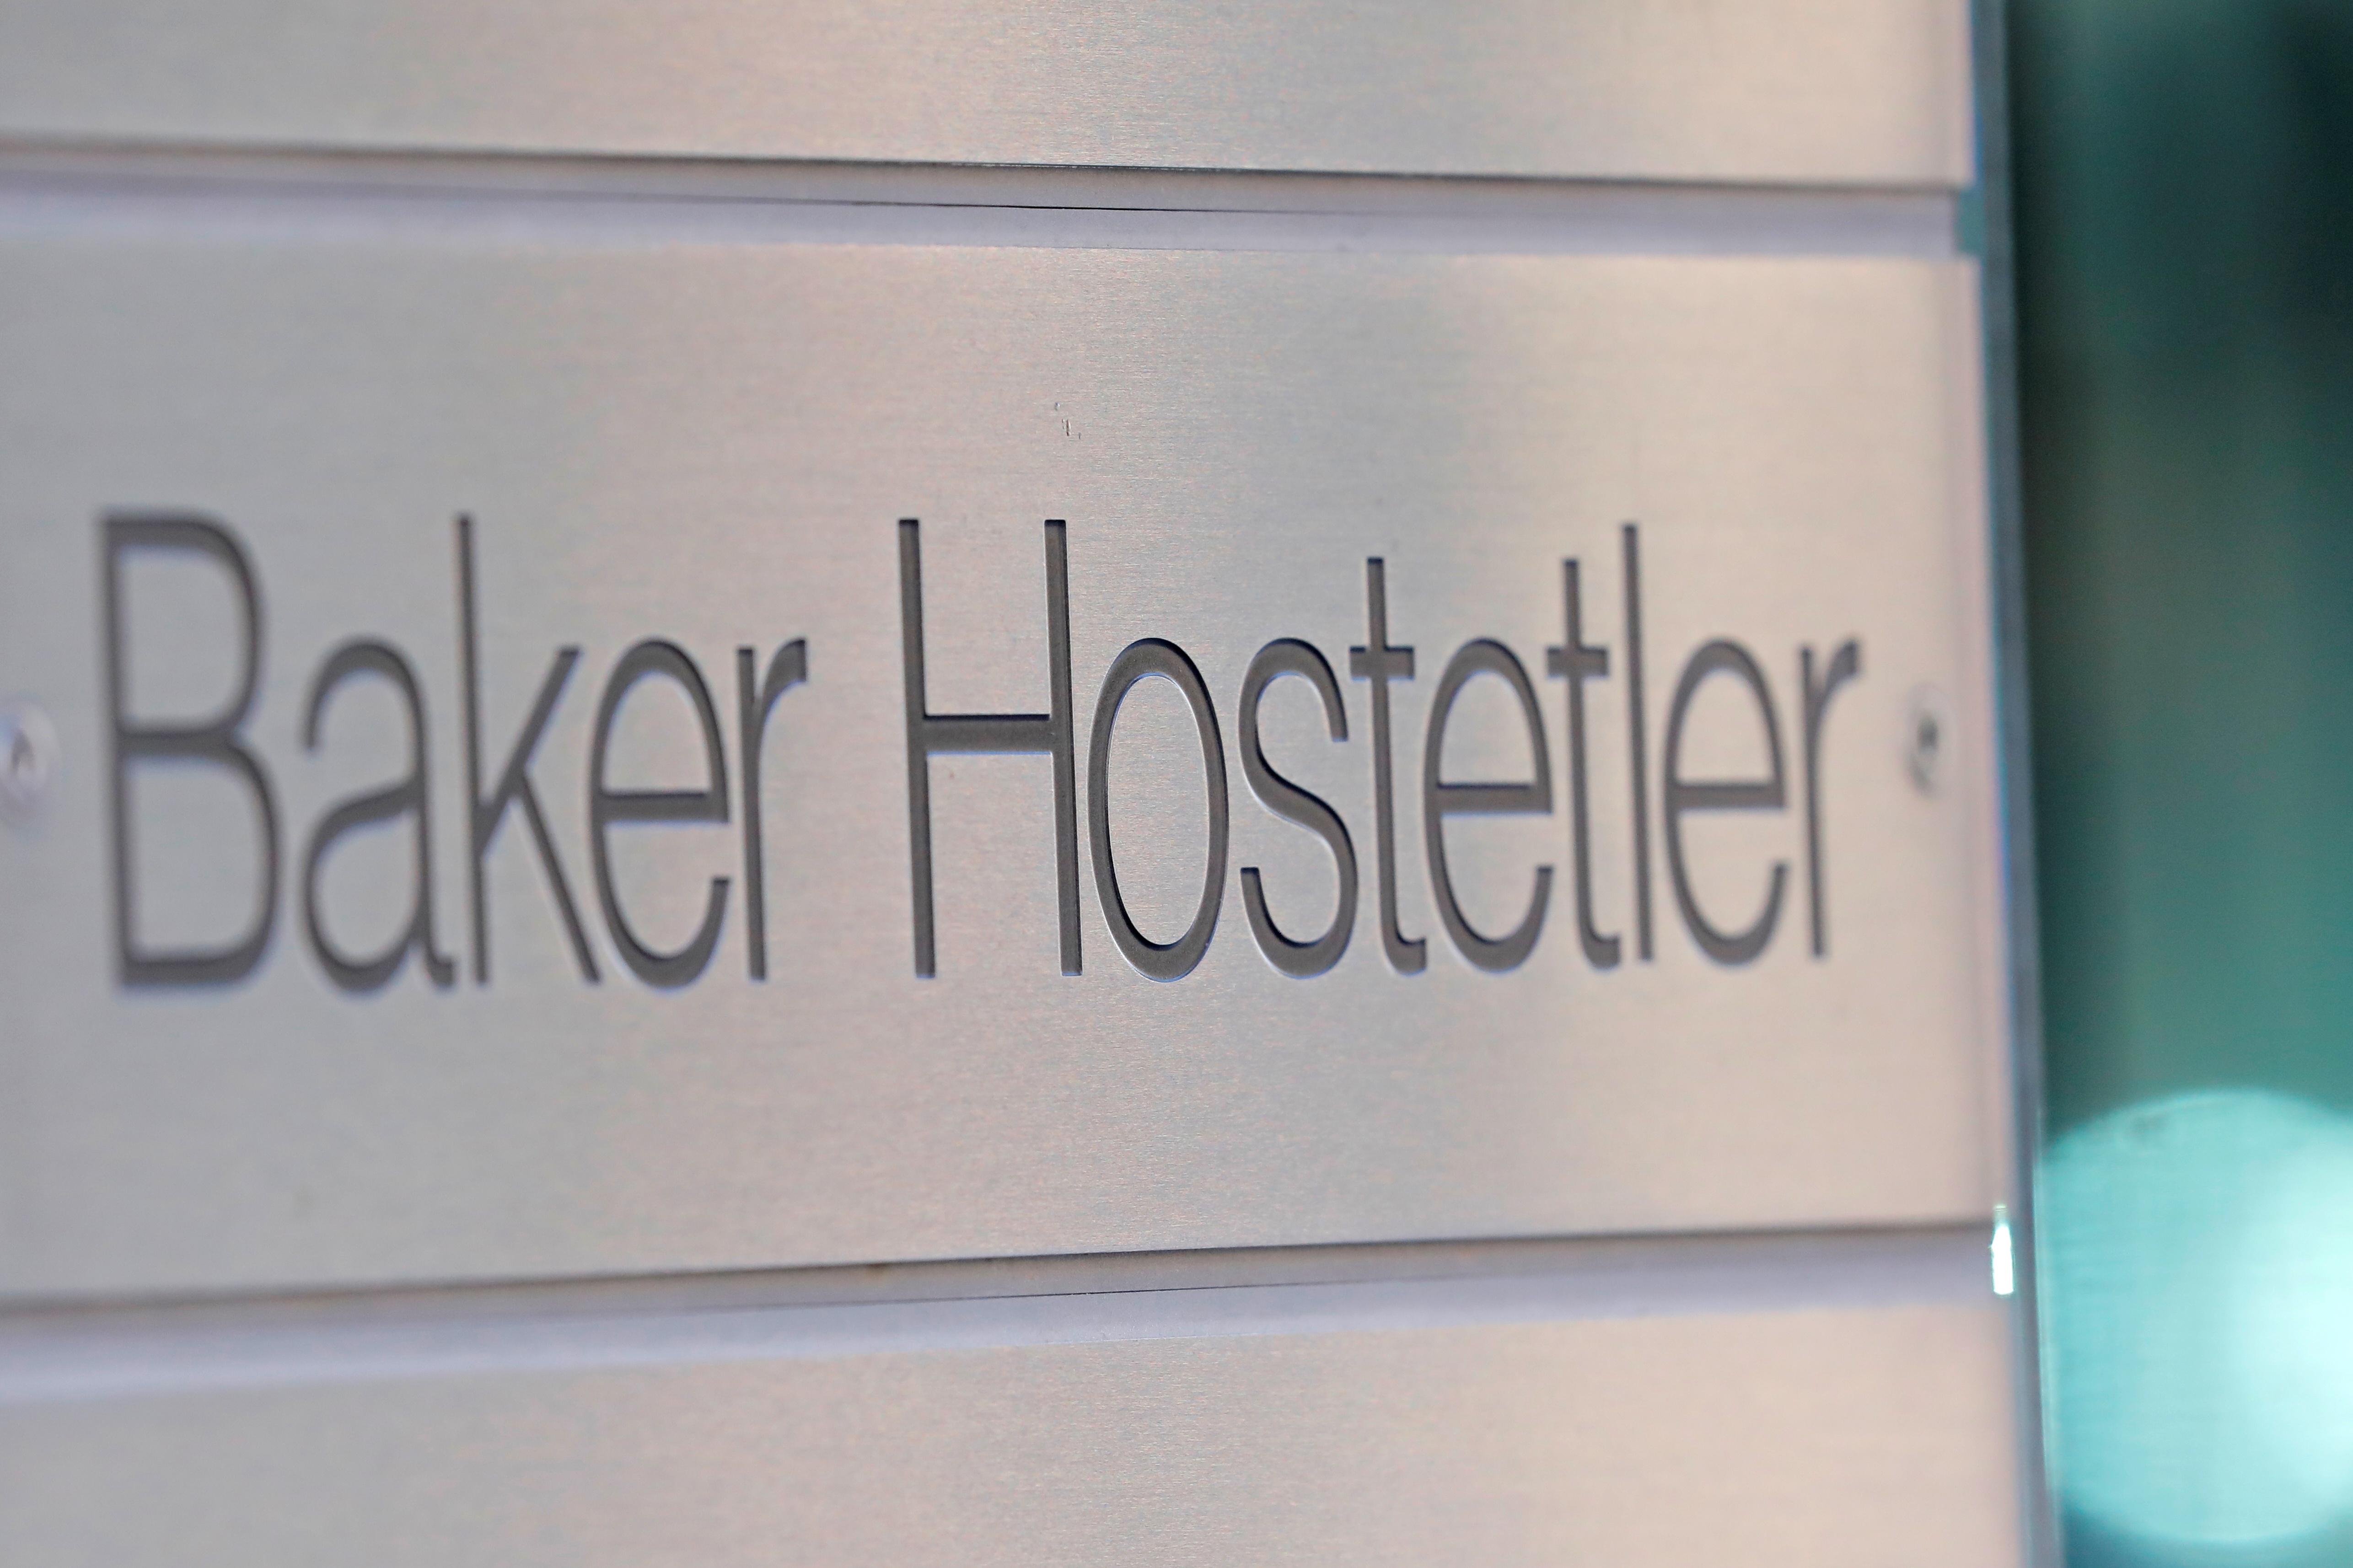 BakerHostetler's offices in Washington, D.C. REUTERS/Andrew Kelly